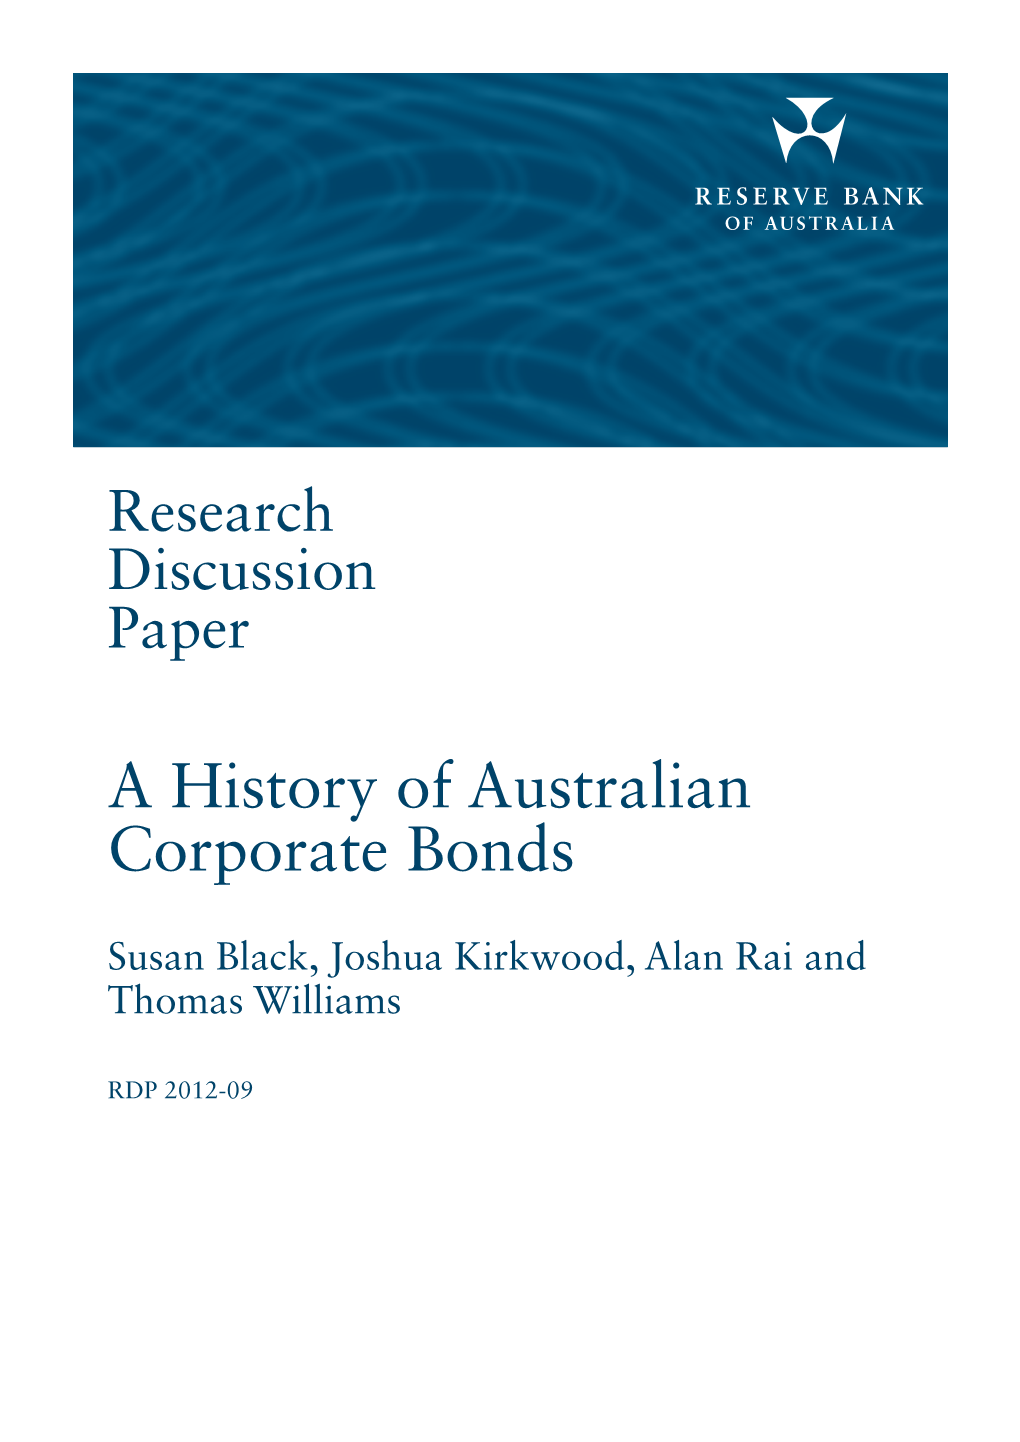 A History of Australian Corporate Bonds